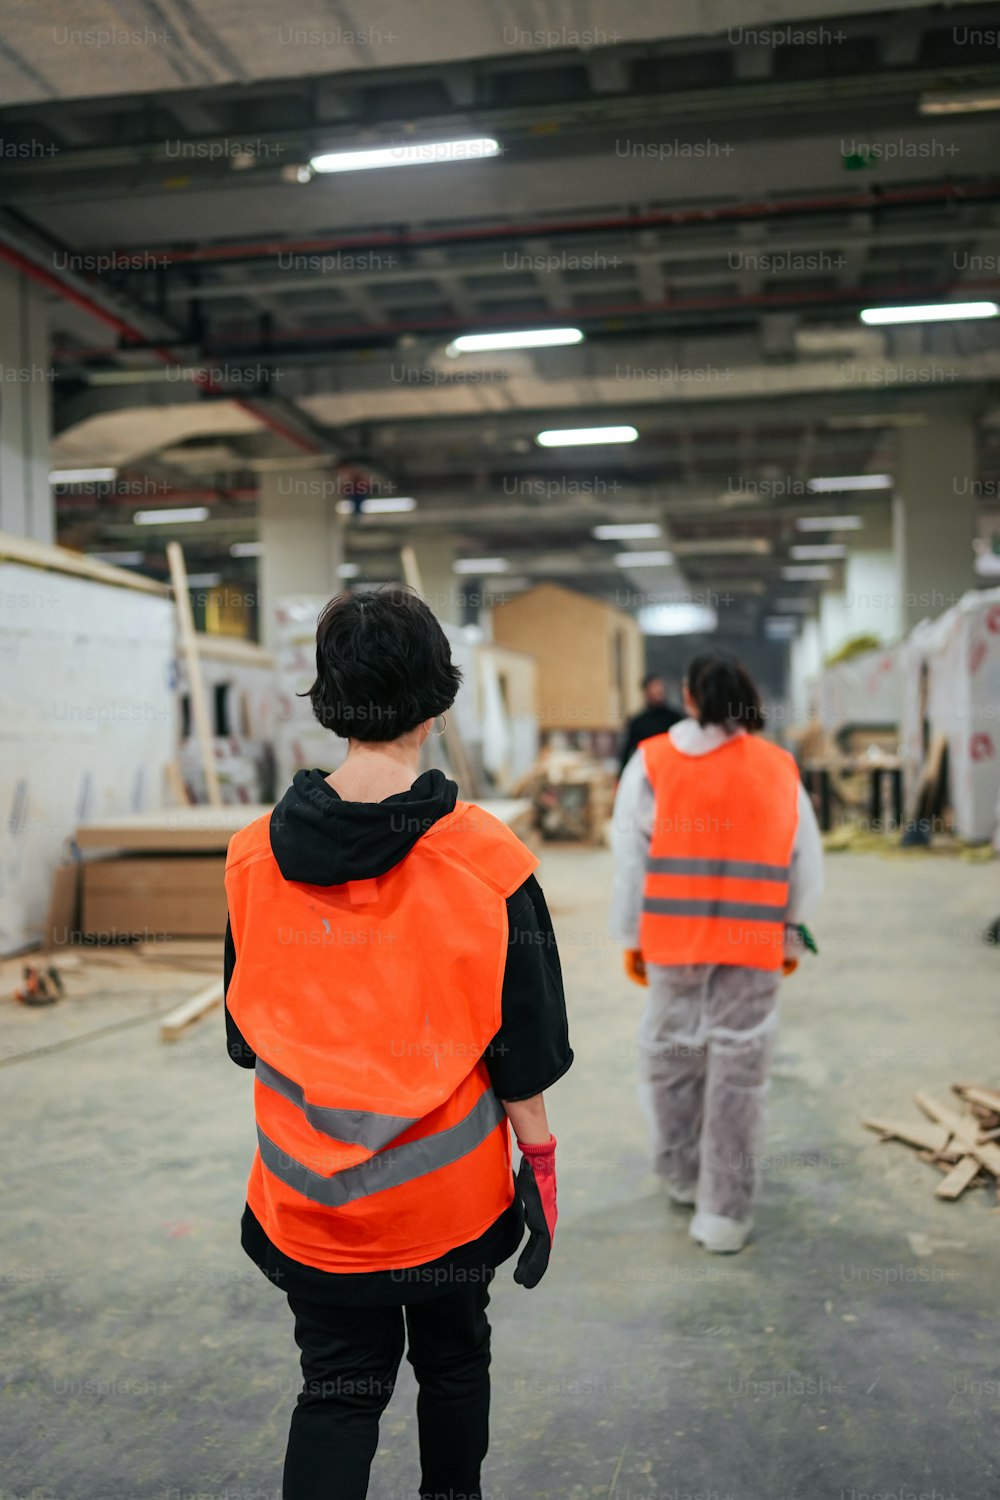 two people in orange vests walking in a warehouse